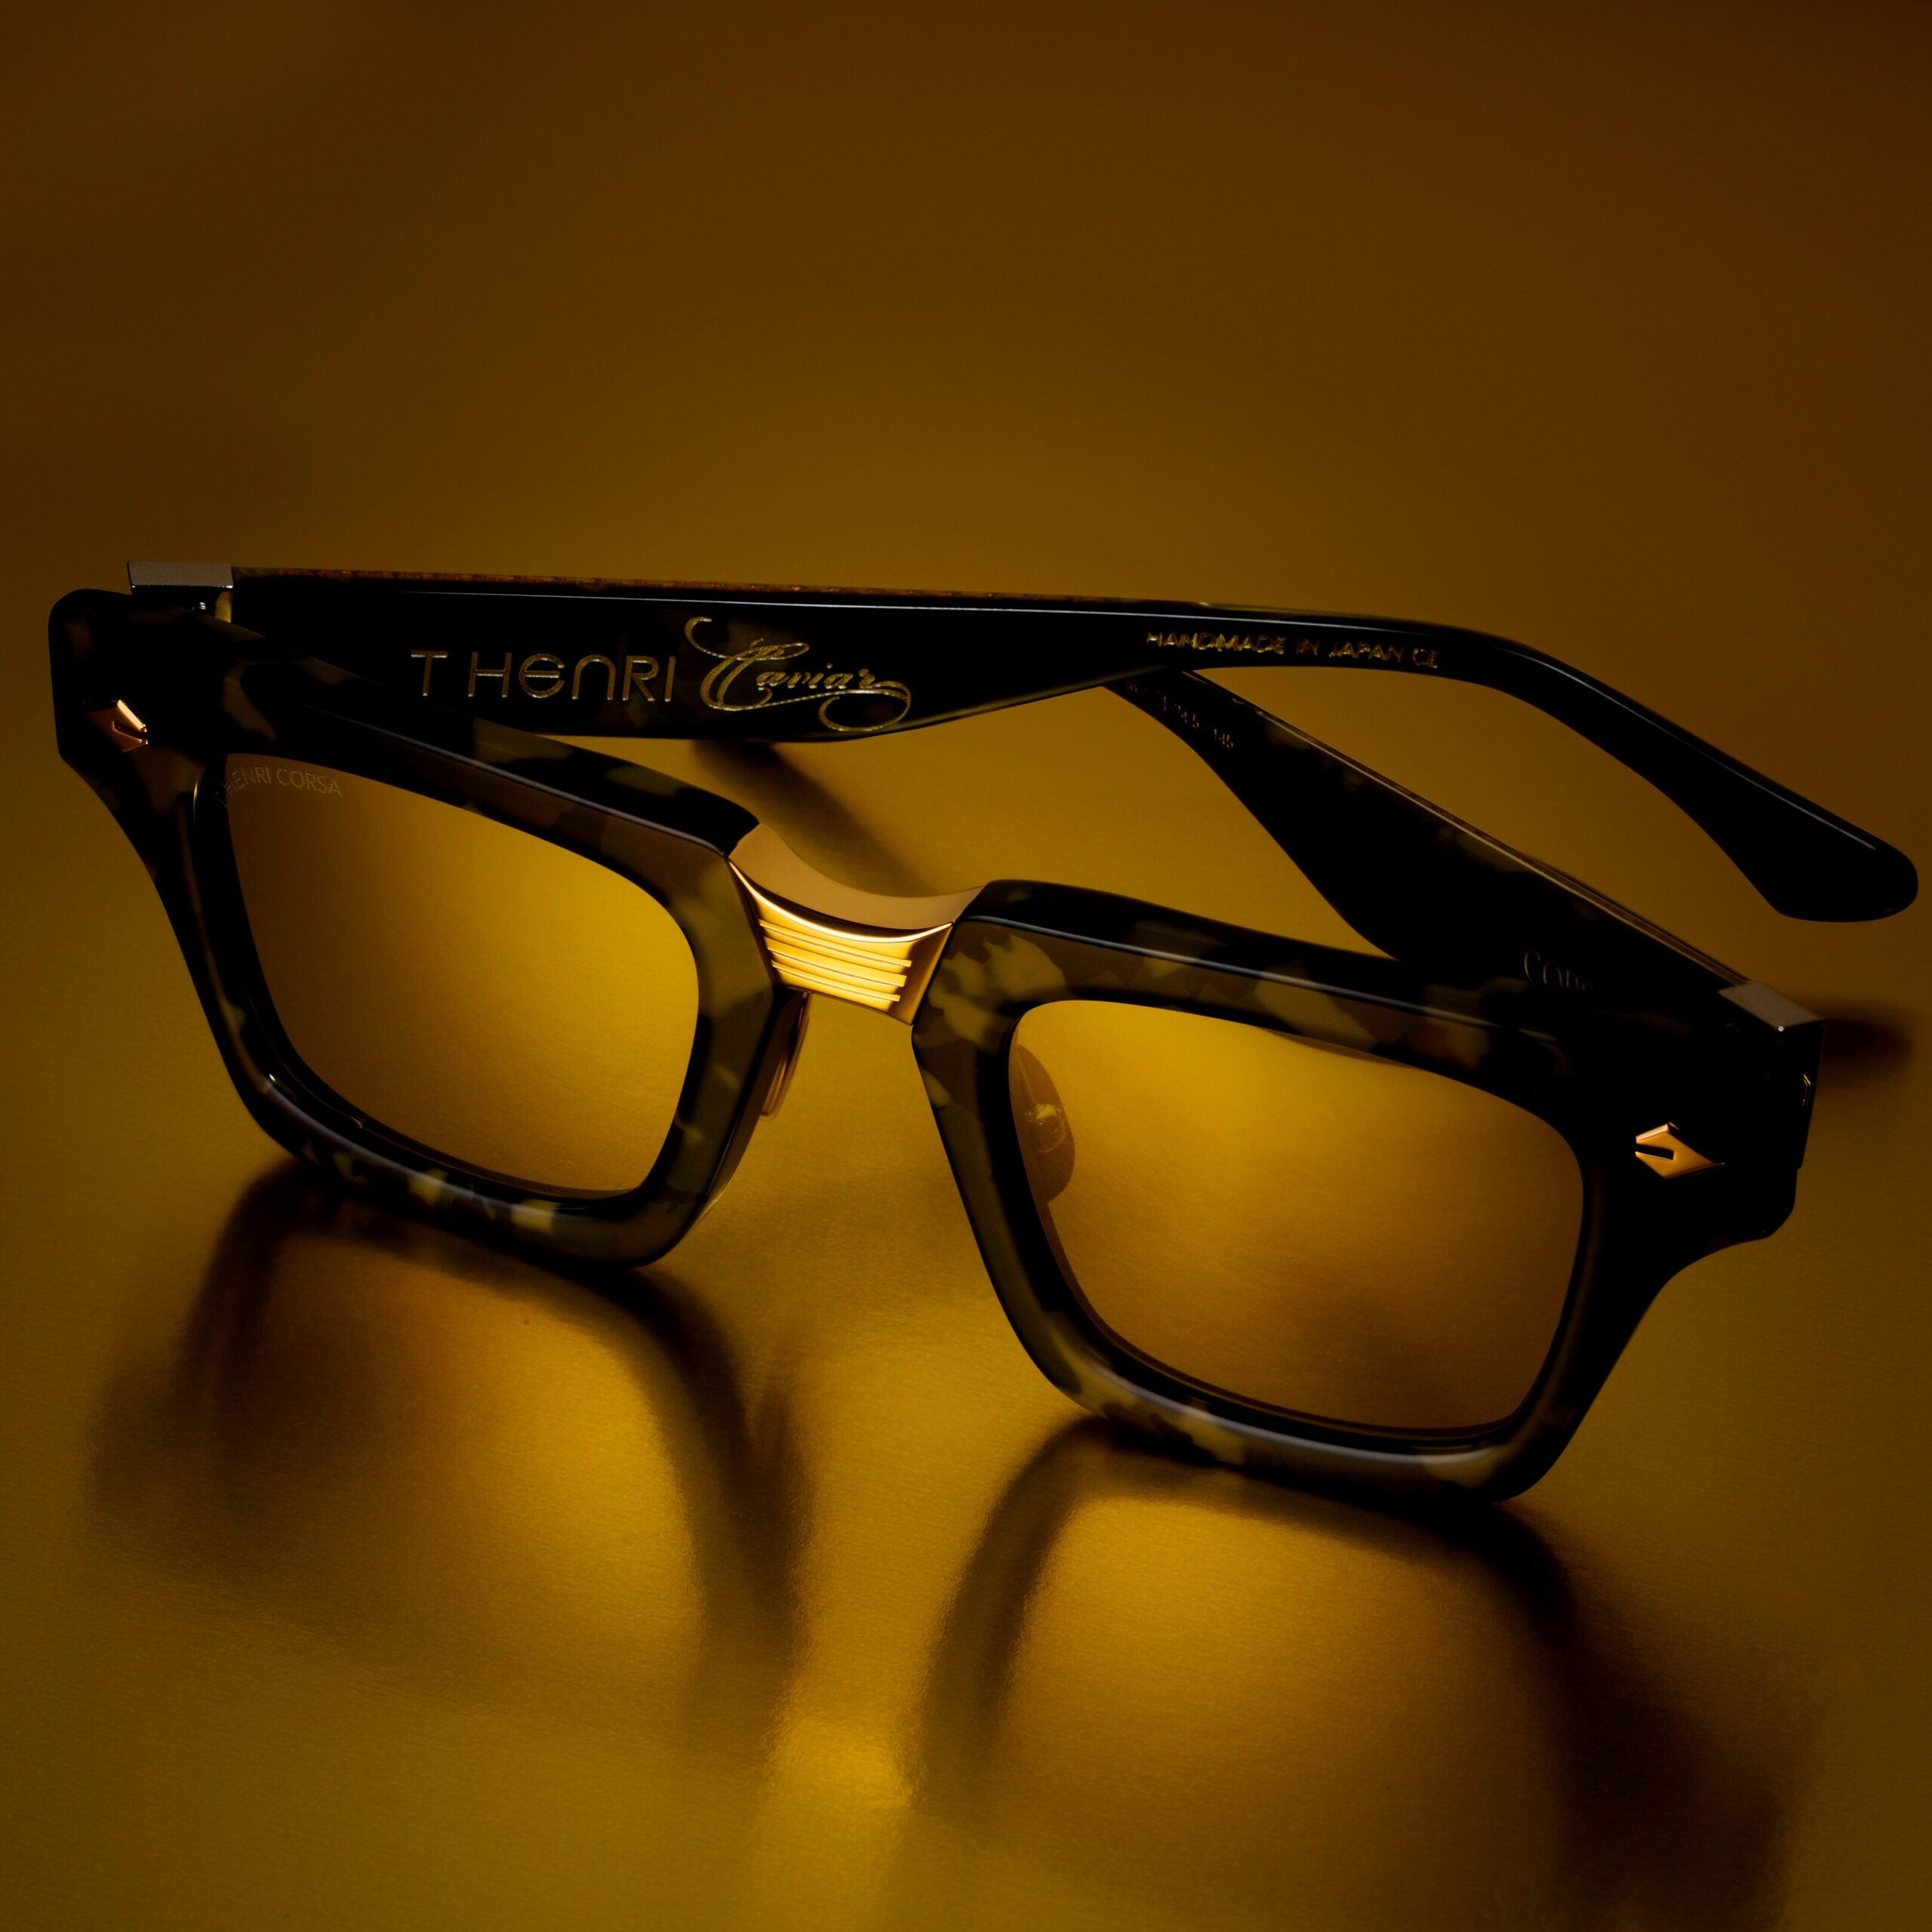 T henri handcrafted eyewear via 360 Magazine